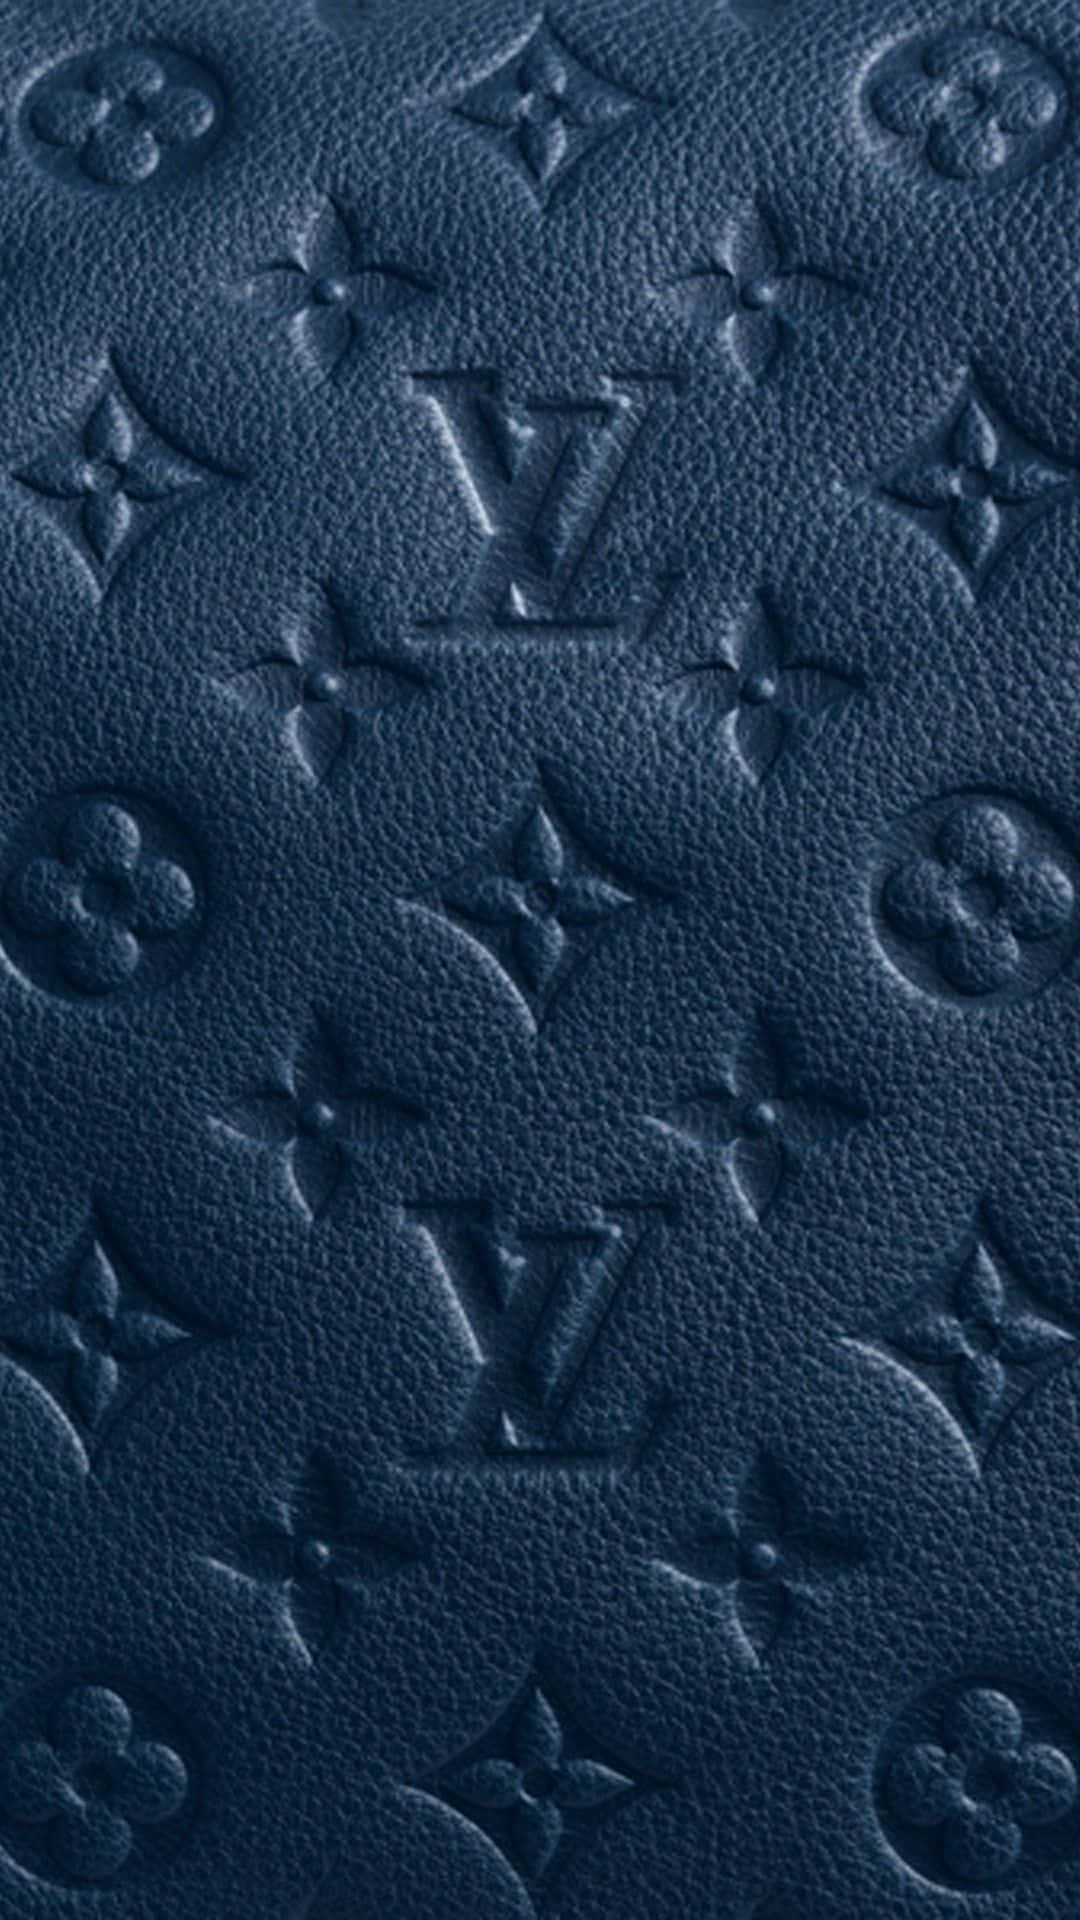 Louis Vuitton Logo Wallpapers - Wallpaper Cave